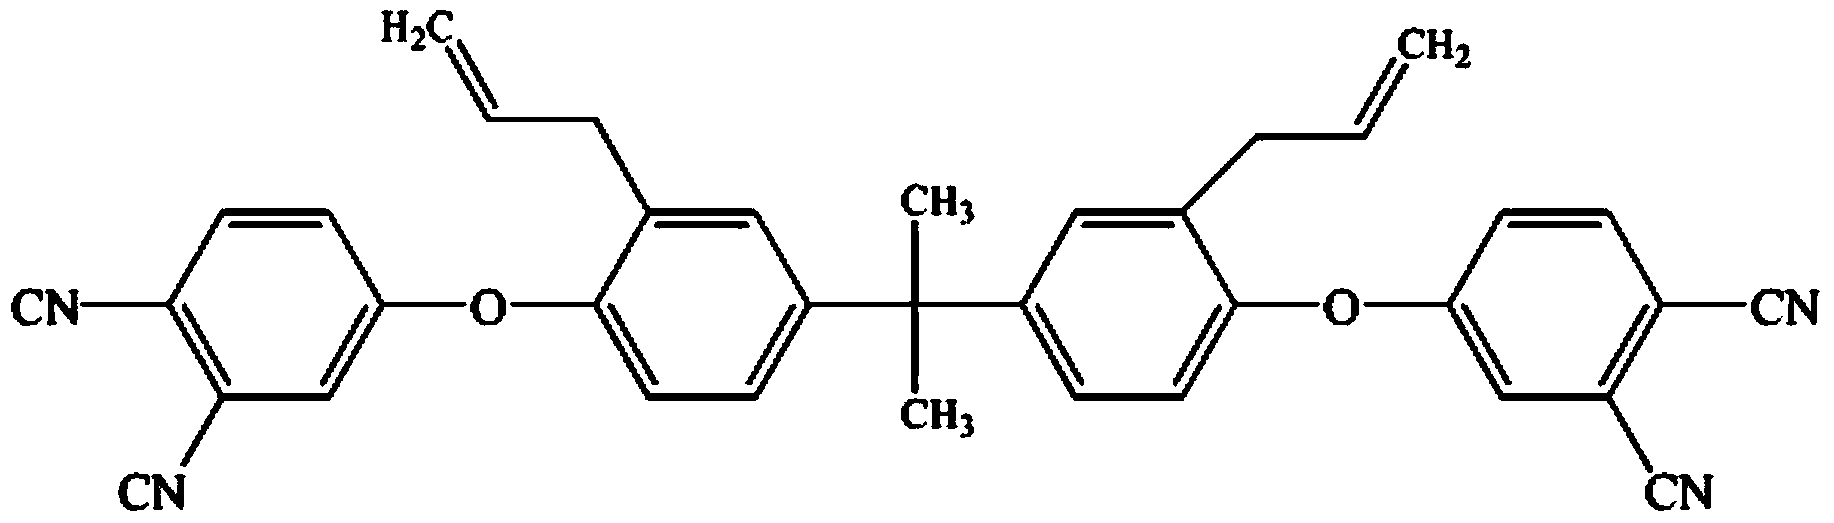 Autocatalytic nitrile resin monomer, polymer and preparation method of polymer